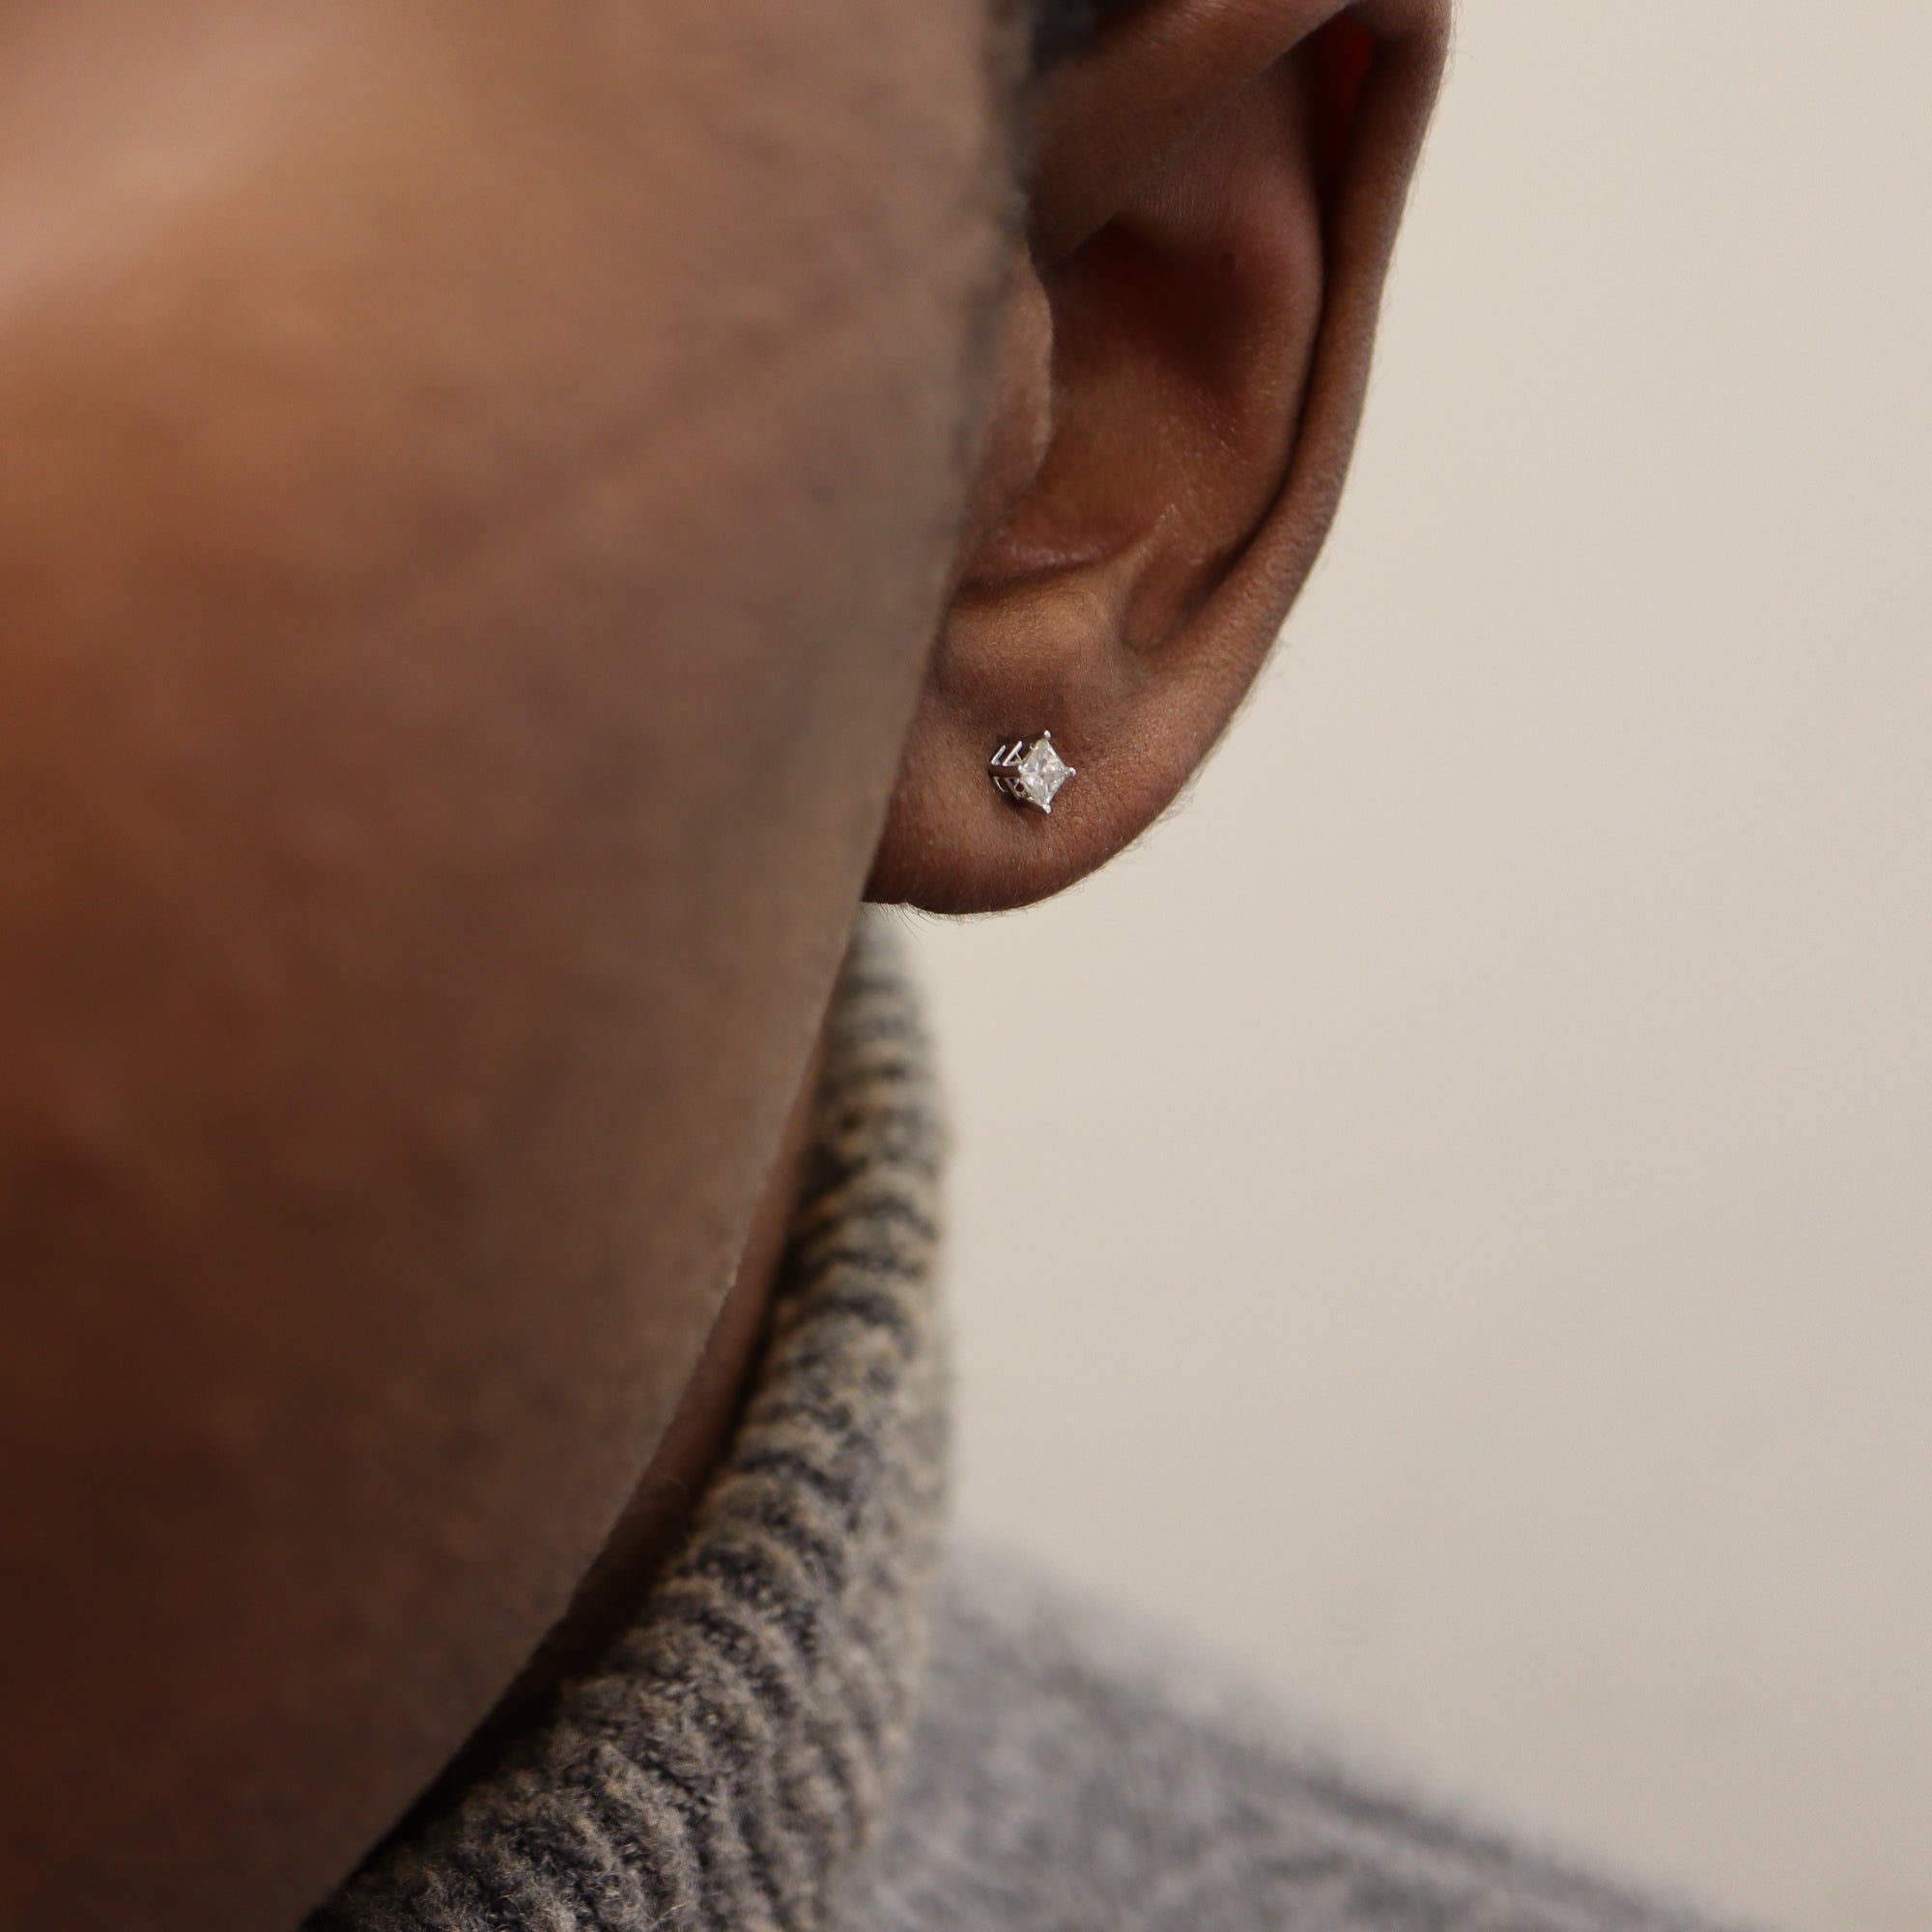 Princess Diamond Stud Earrings | 0.60ctw |